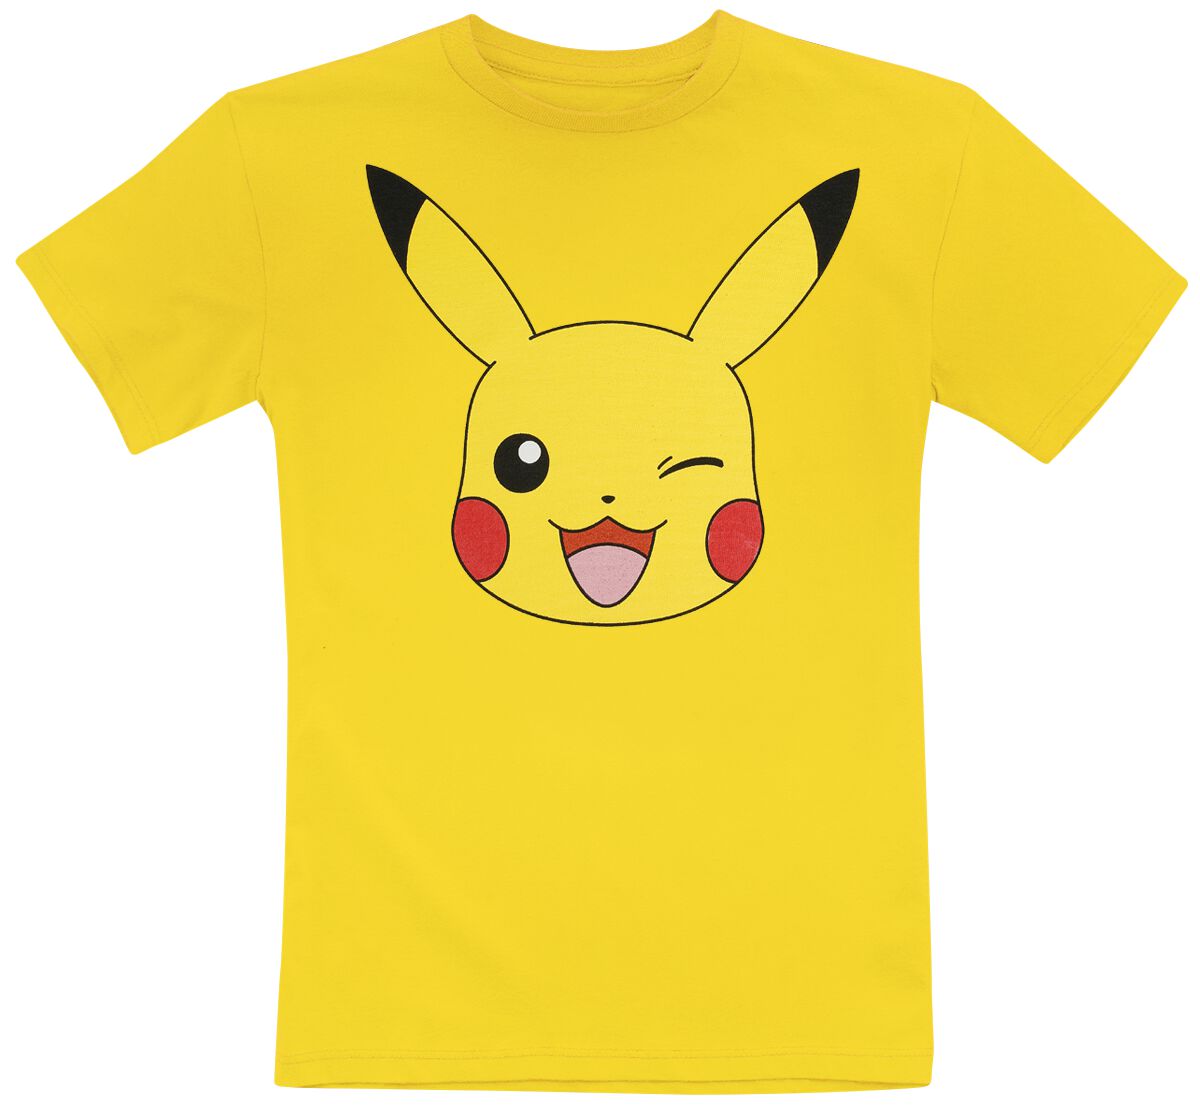 Pokémon Kids - Pikachu Face T-Shirt yellow